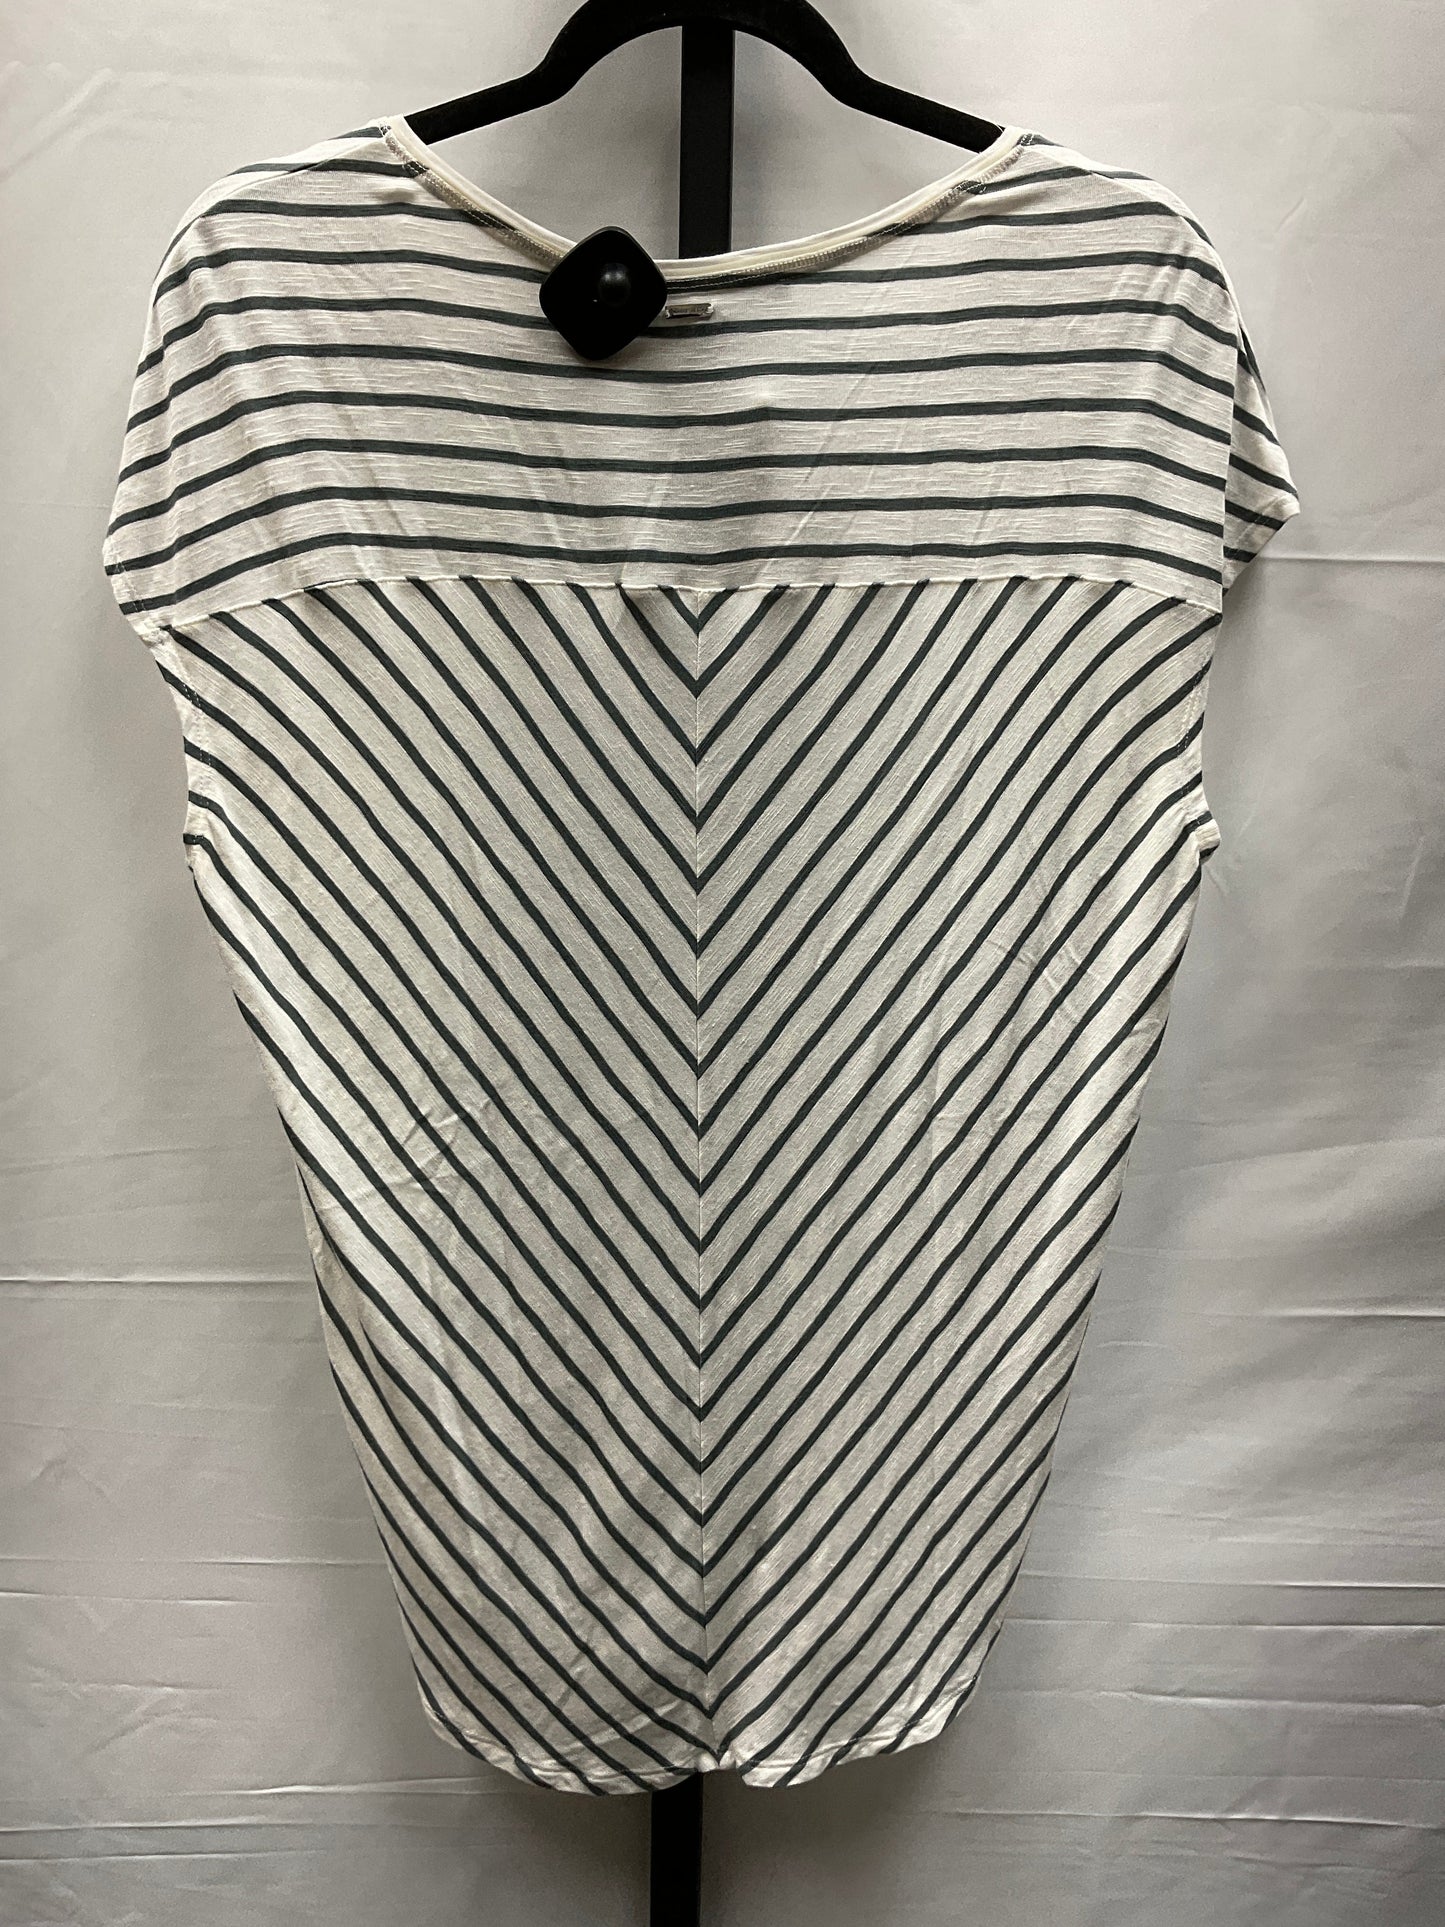 Striped Pattern Top Short Sleeve White House Black Market, Size S